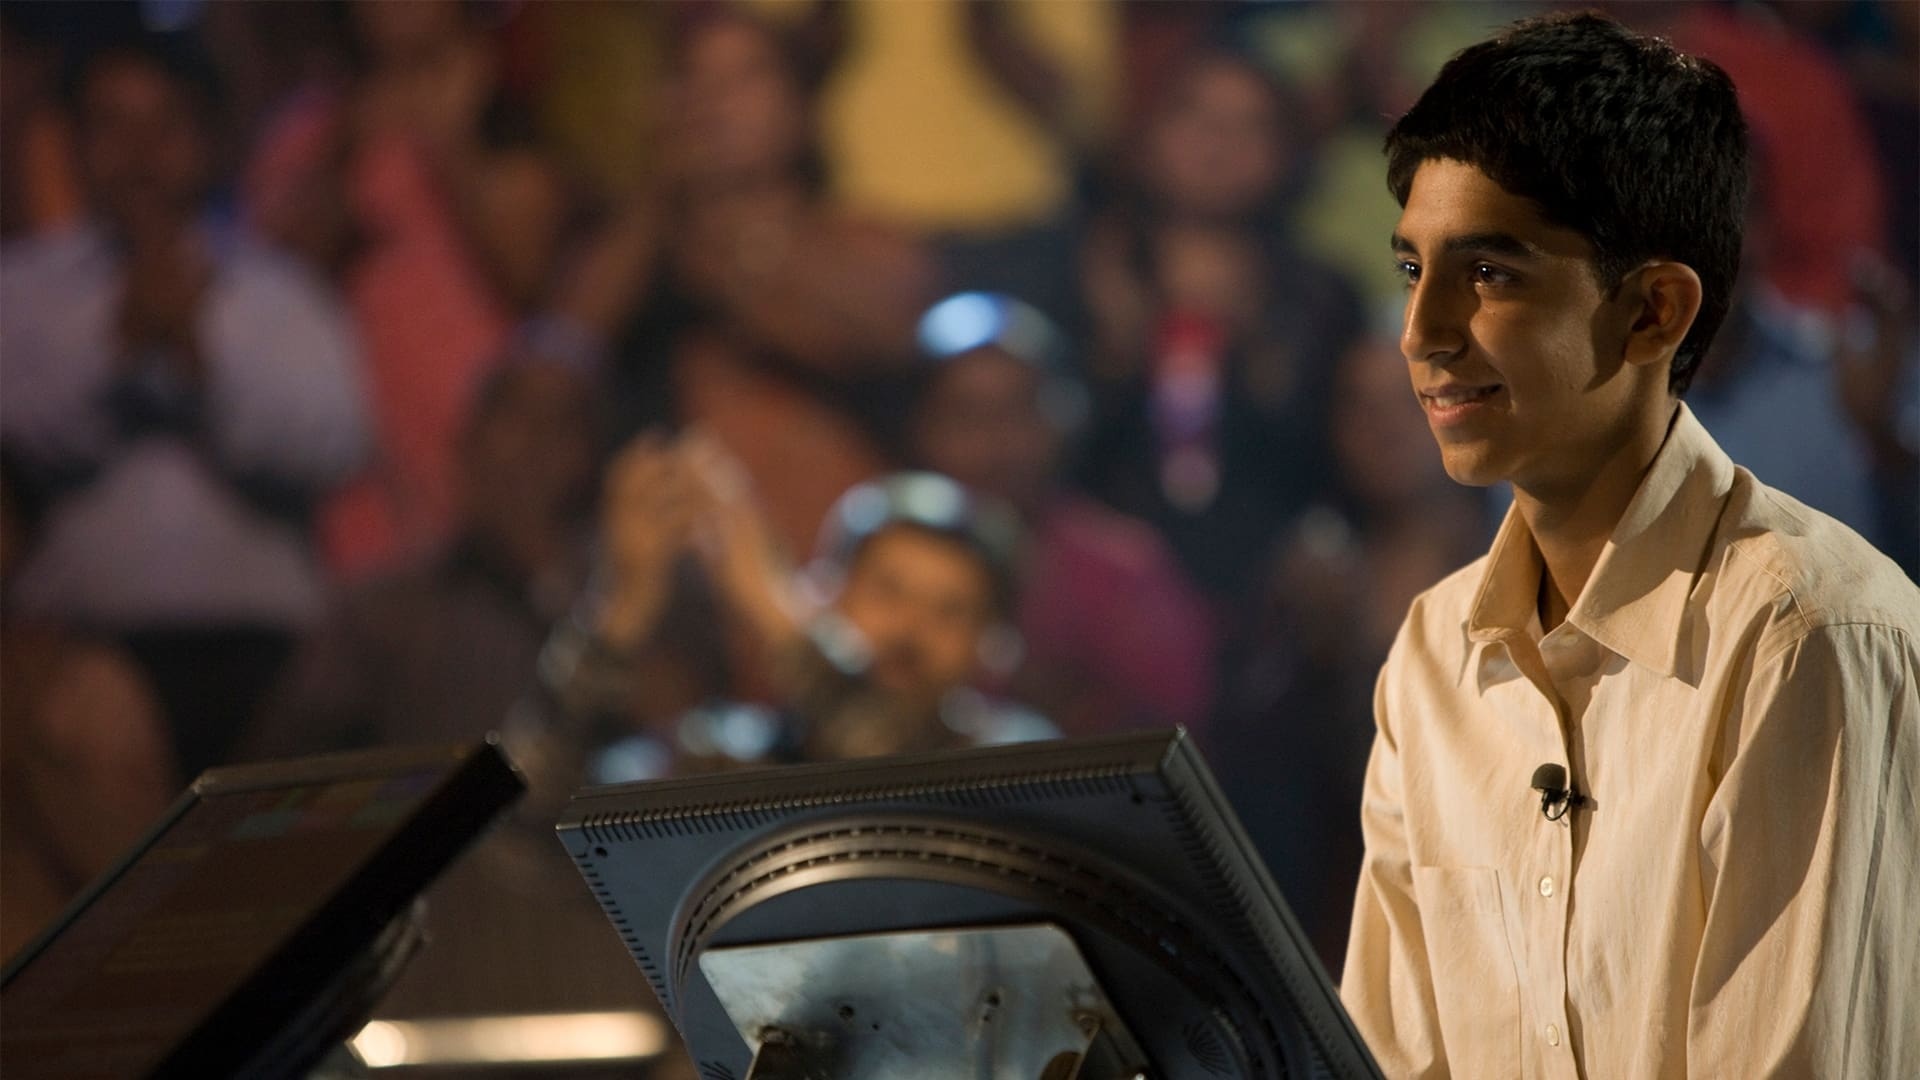 Slumdog Millionaire: Dev Patel as Jamal Malik, a boy born and raised in the poverty of Bombay. 1920x1080 Full HD Wallpaper.